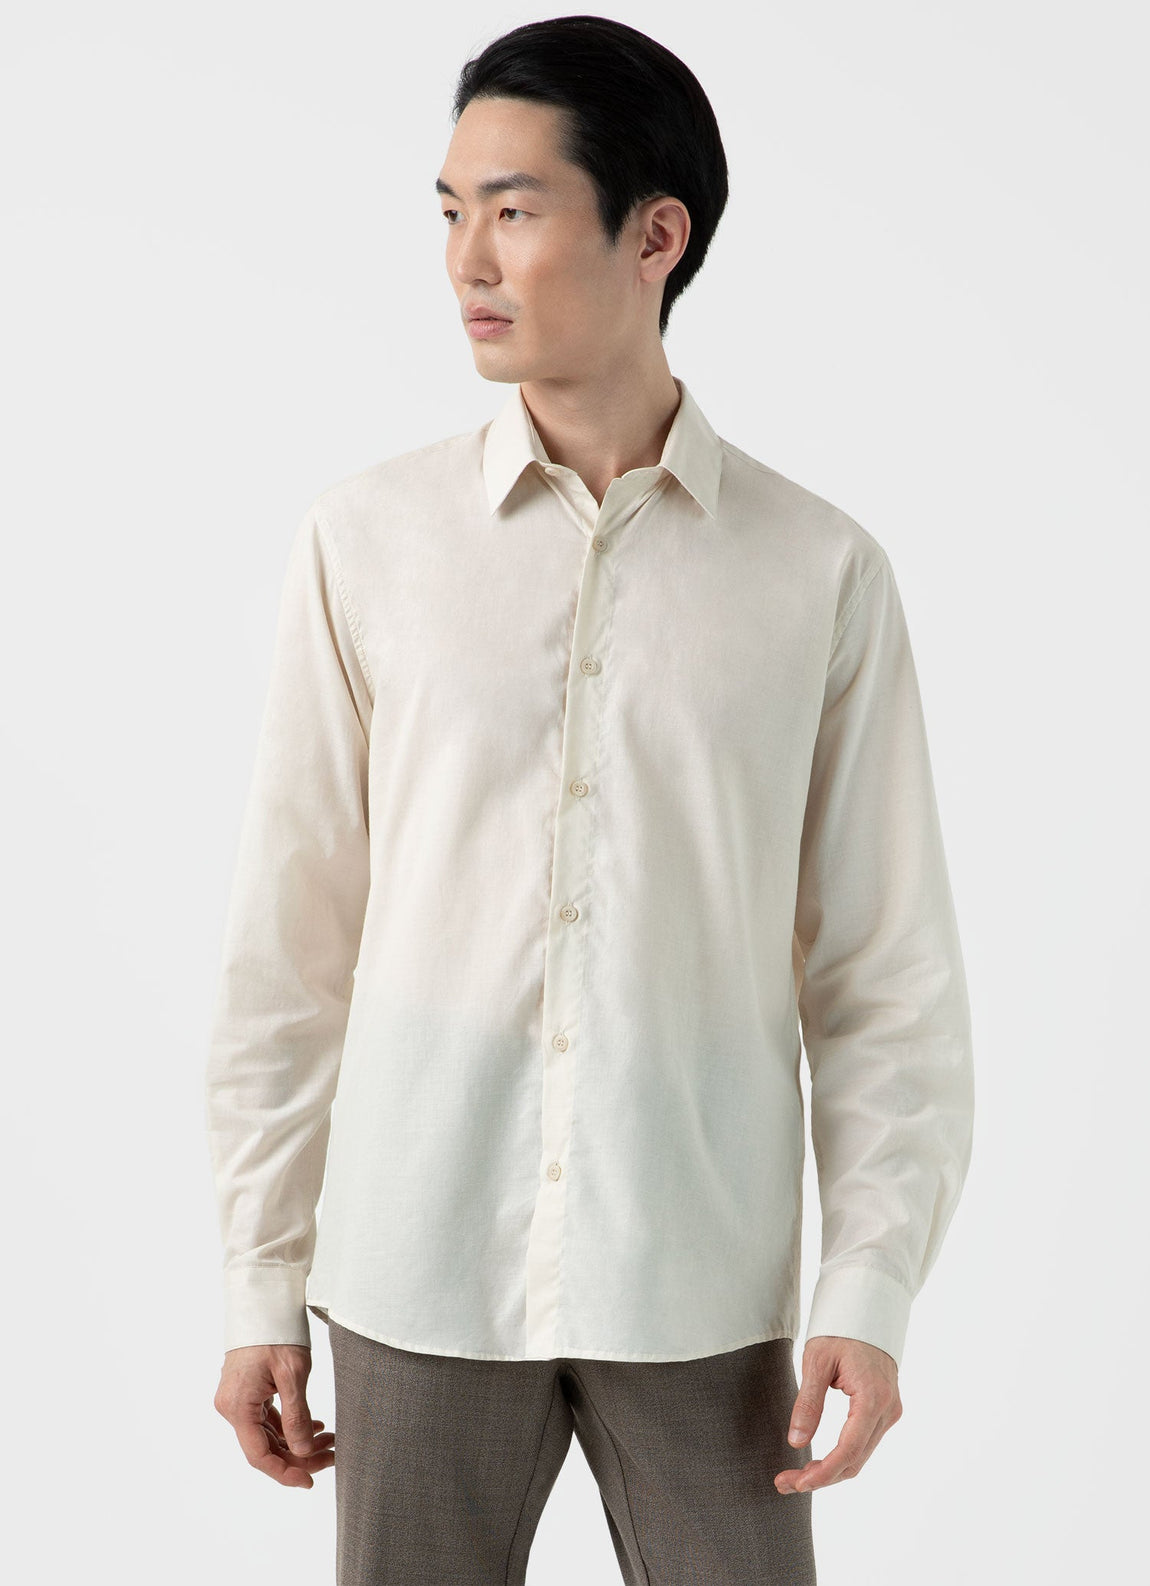 Men's Cotton Cashmere Shirt in Ecru | Sunspel